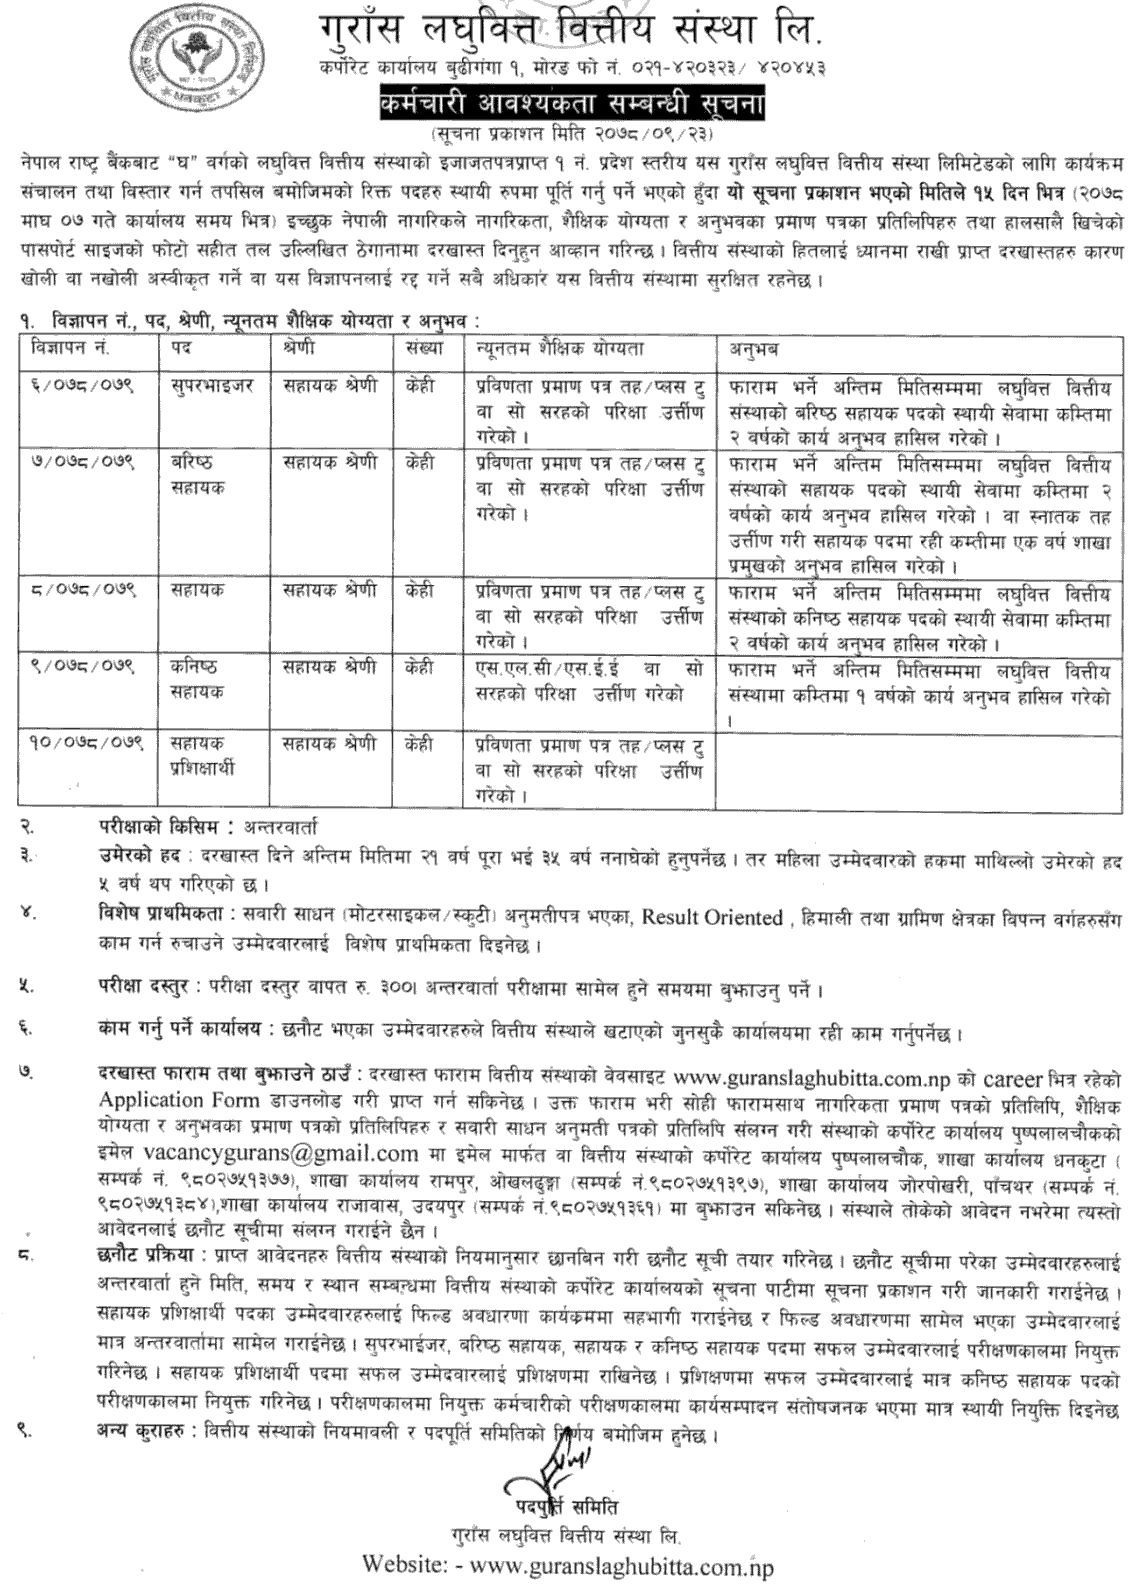 Gurans Laghubitta Bittiya Sanstha Limited Vacancy for Various Post